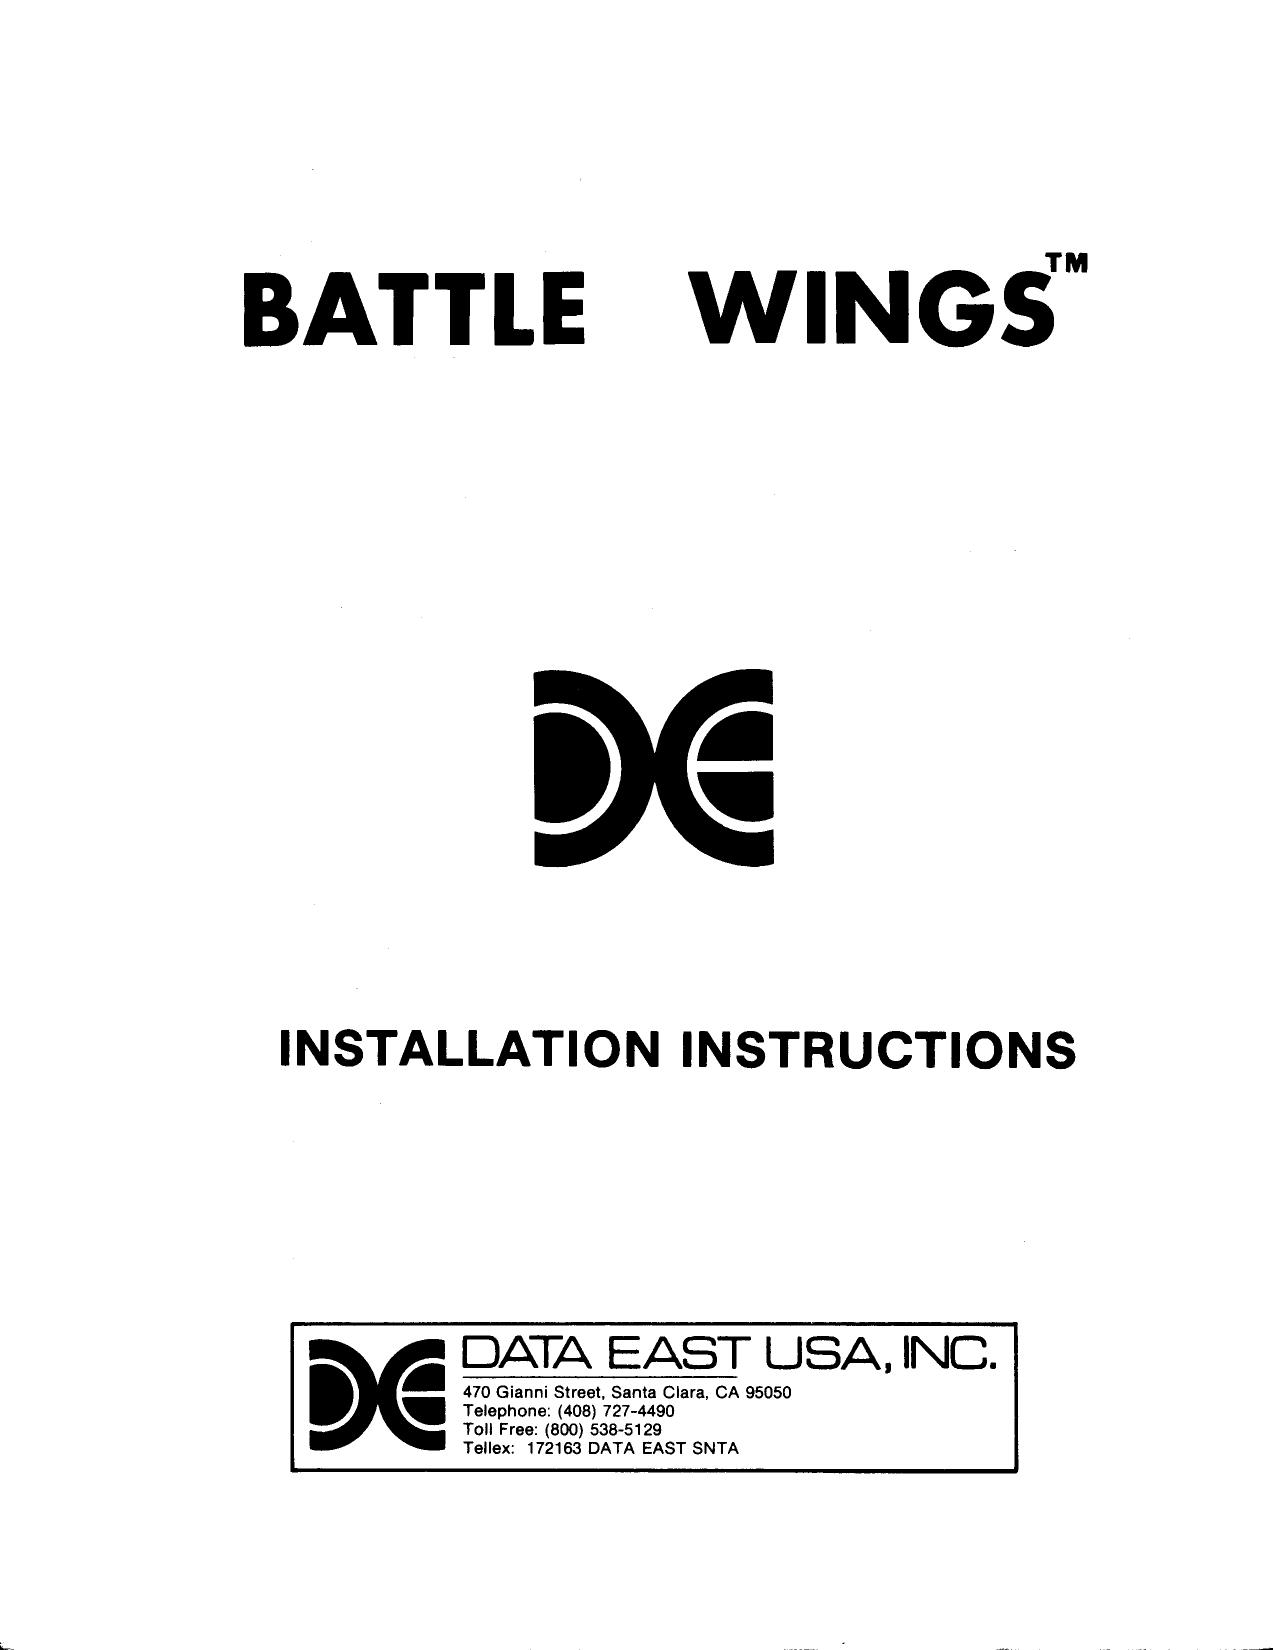 battlewings